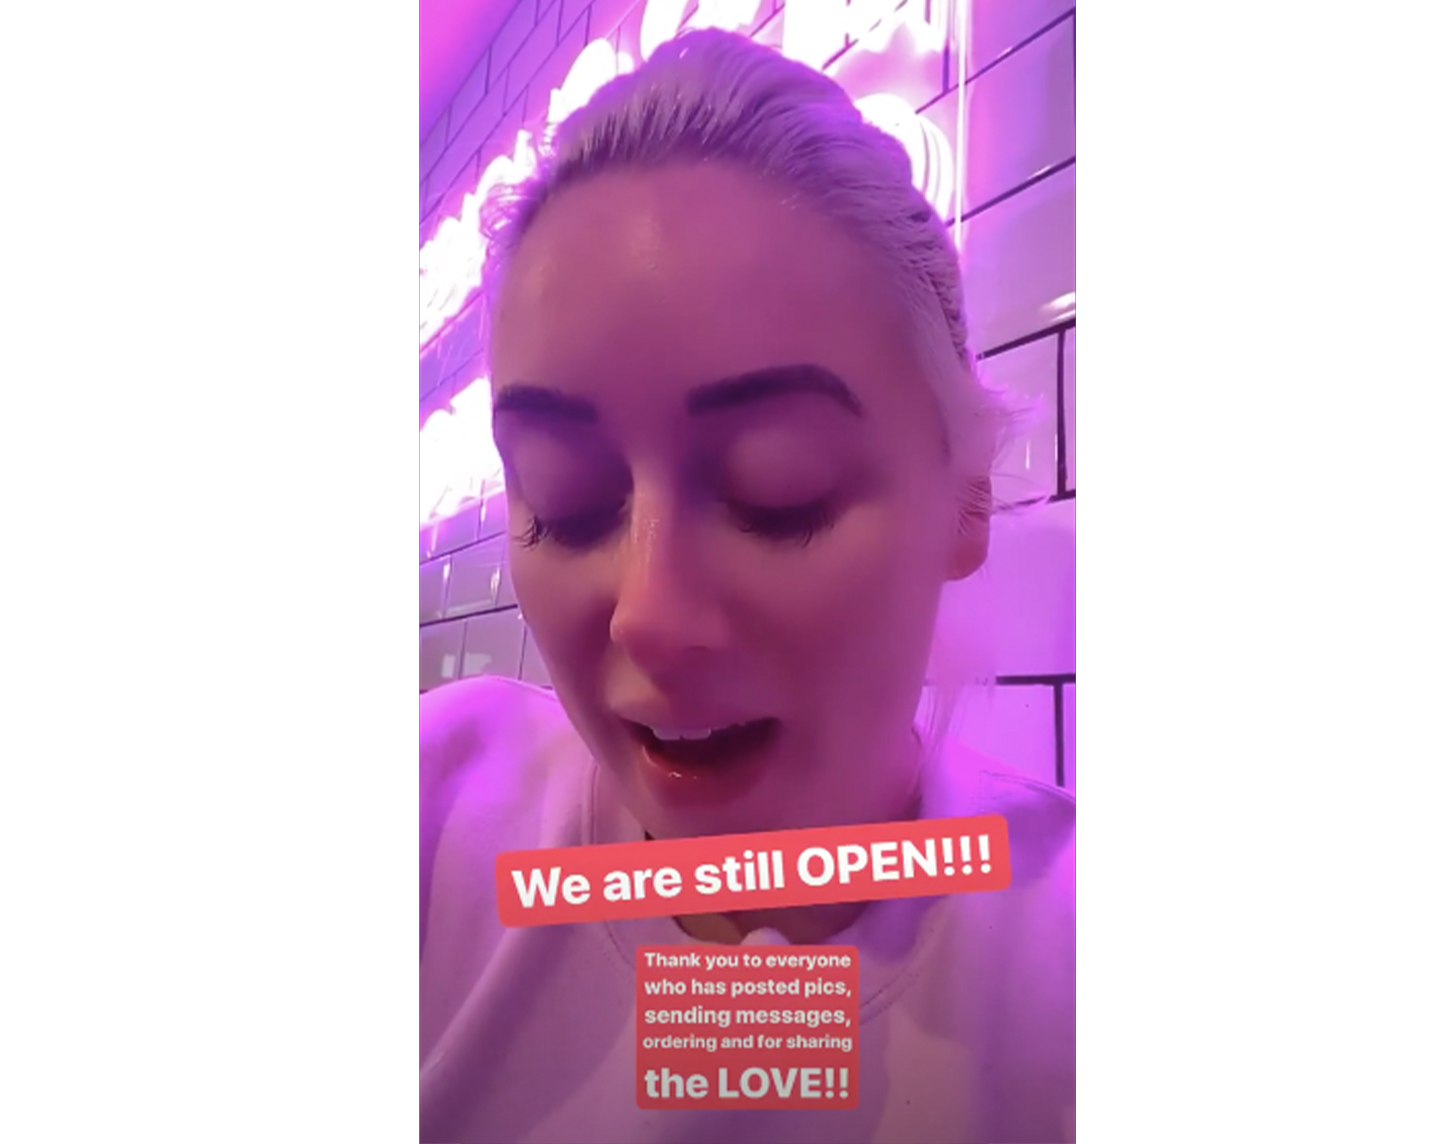 HART Instagram message showing that the restaurant is still open